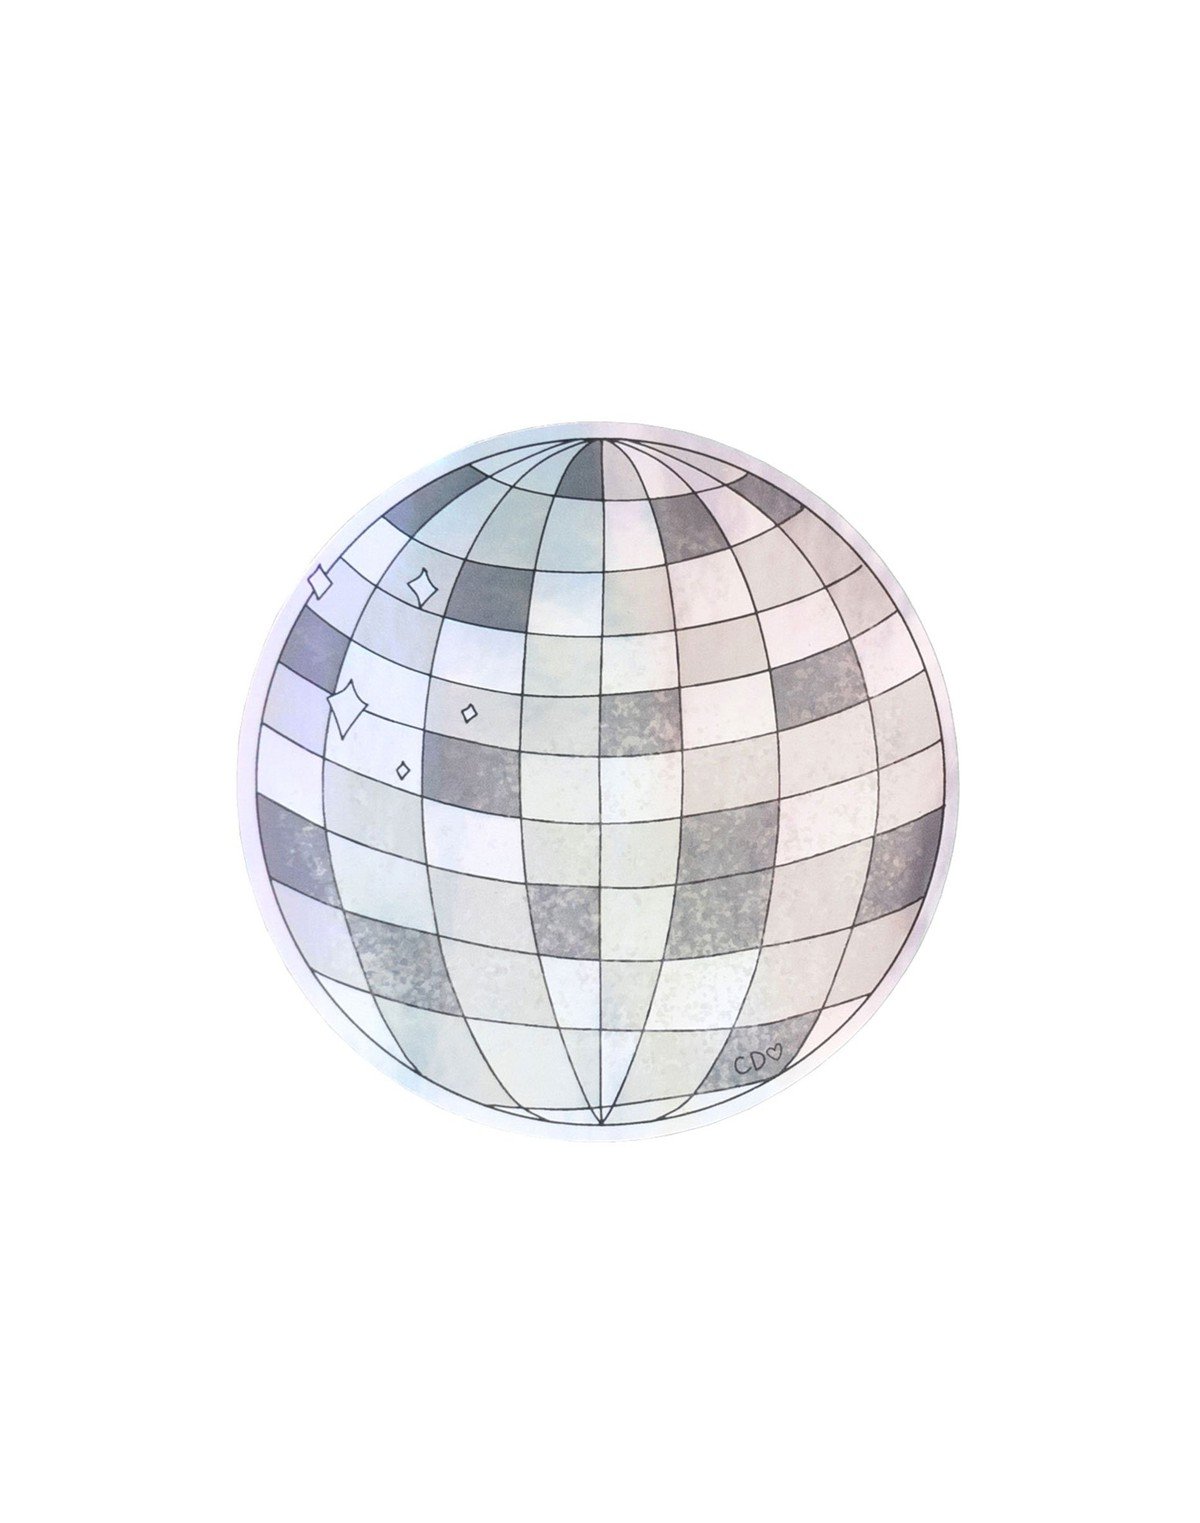 Disco Ball Decal Sticker item